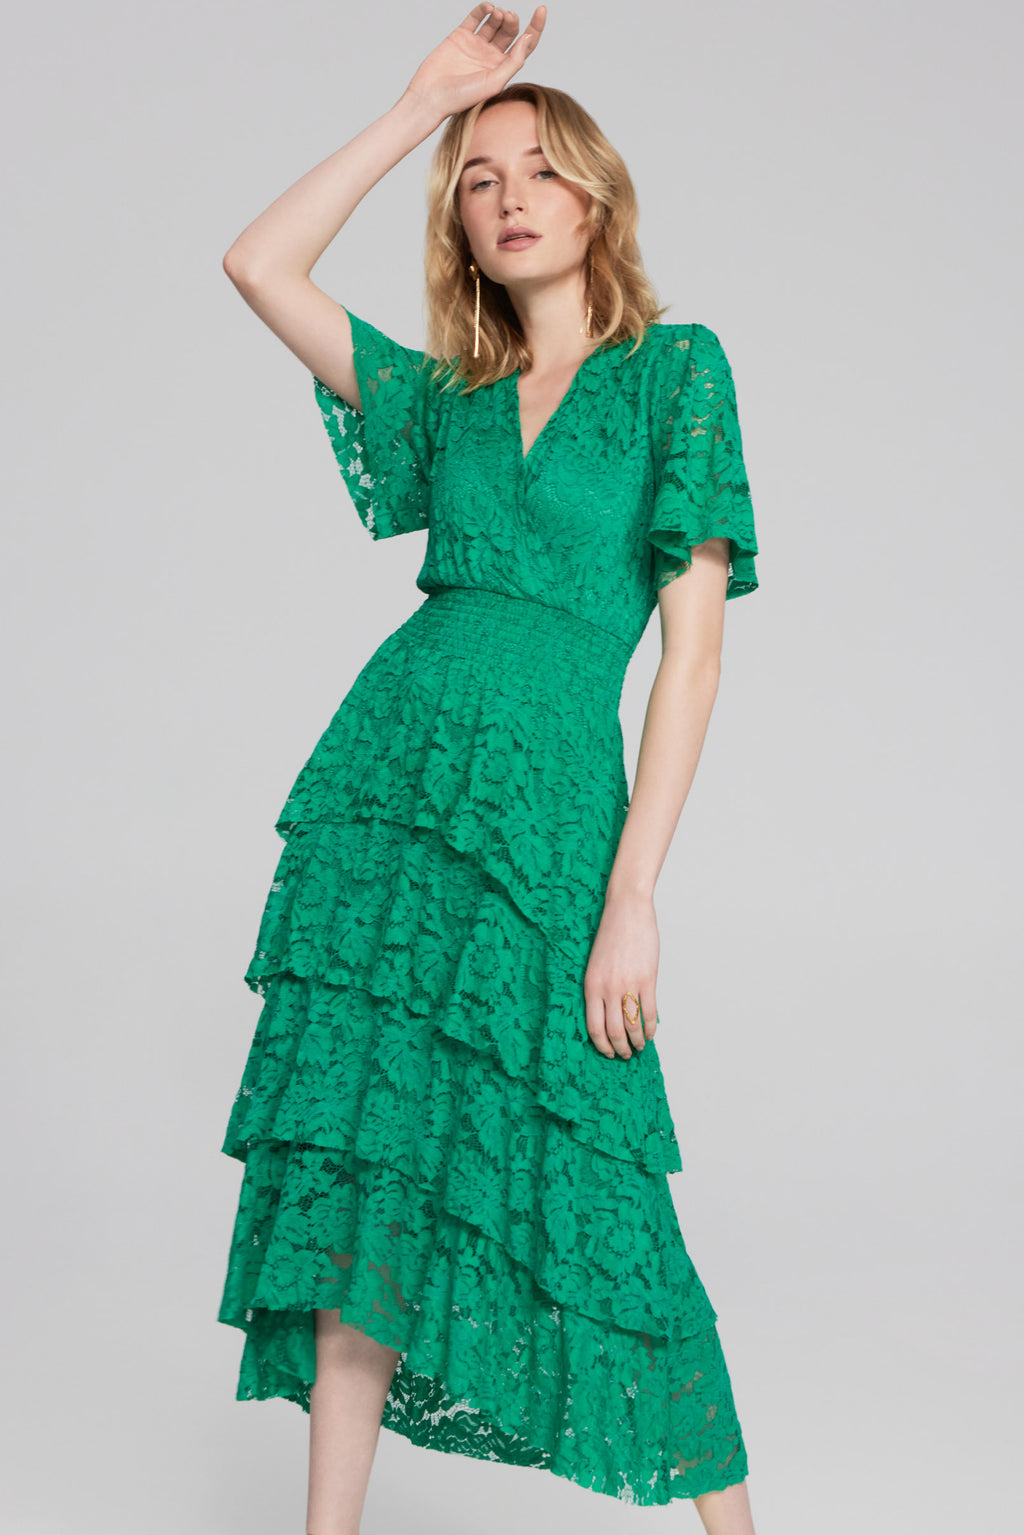 Joseph Ribkoff Noble Green Lace Ruffled A-Line Dress Style 241759